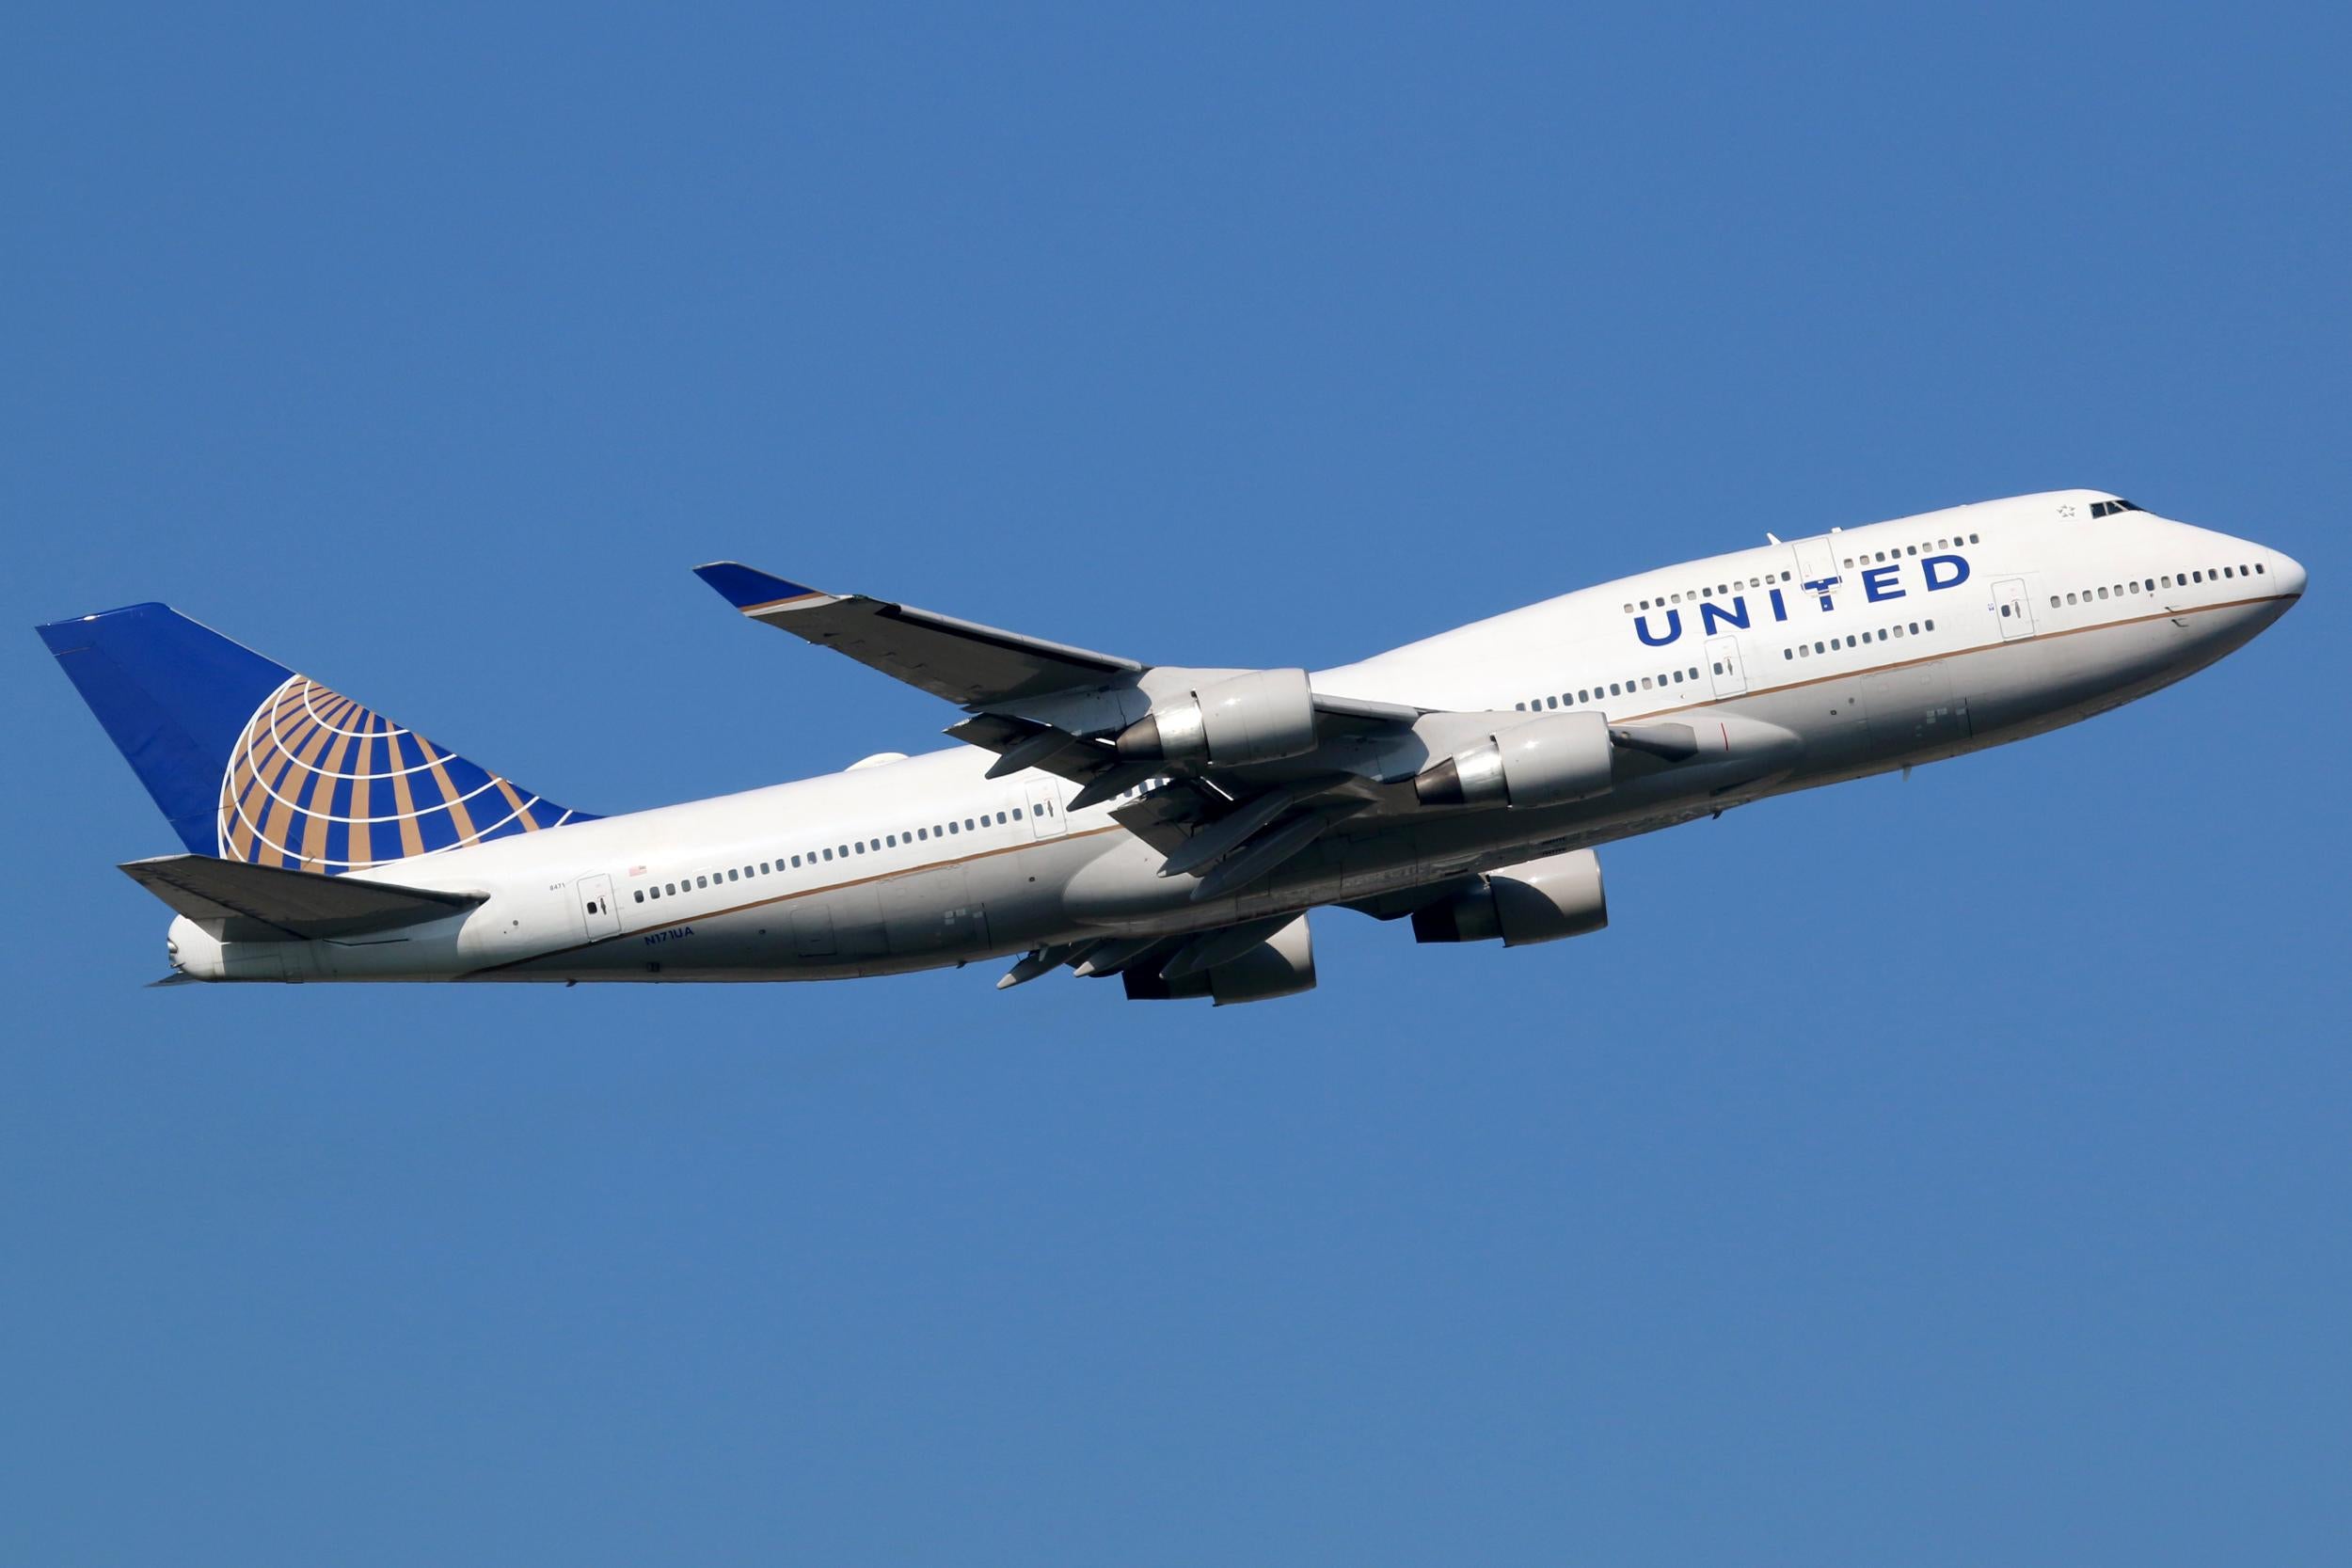 An elderly passenger has died onboard a United flight to Newark